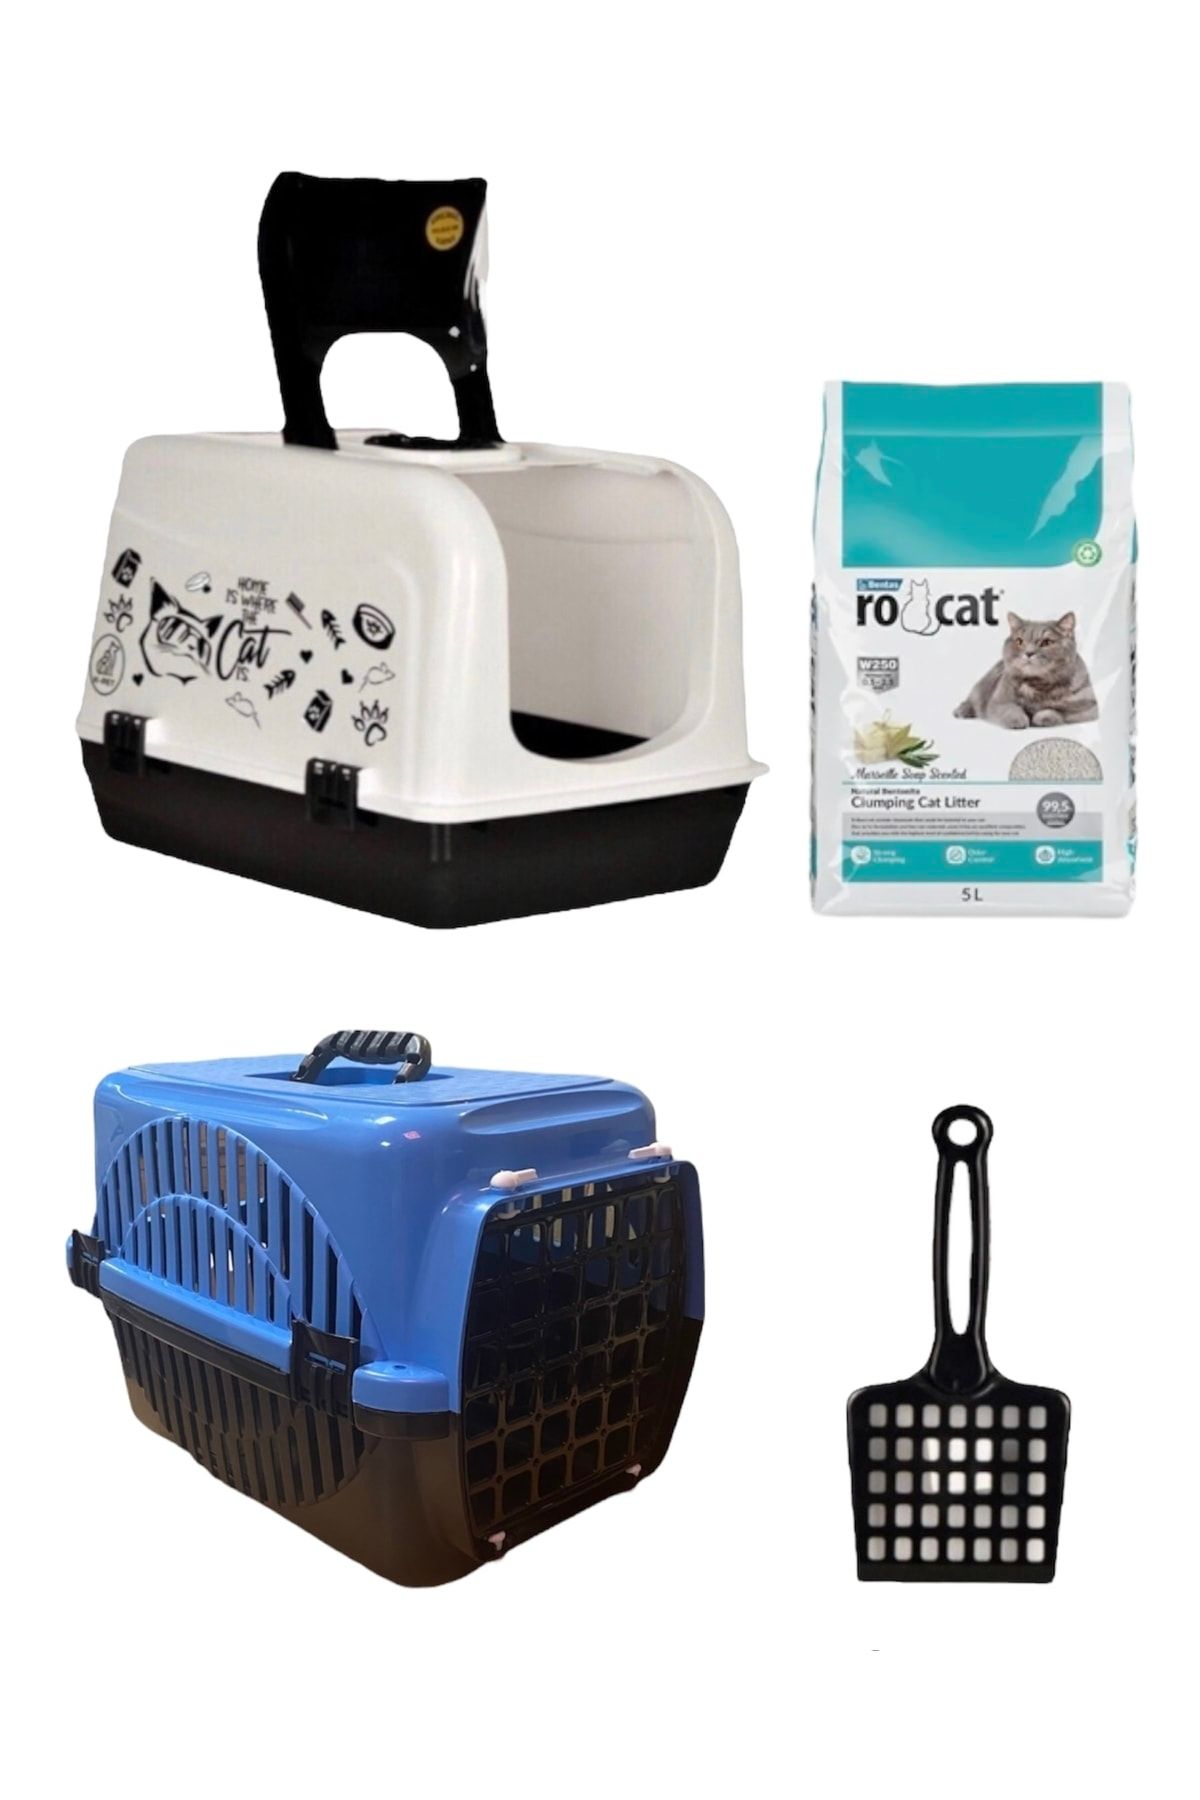 Çiftsan Maxi Karbon Filtreli Kapalı Kedi Tuvaleti+ Kırılmaz Kürek+ Rocat Kedi Kumu 5l + Kedi Taşıma Kabı